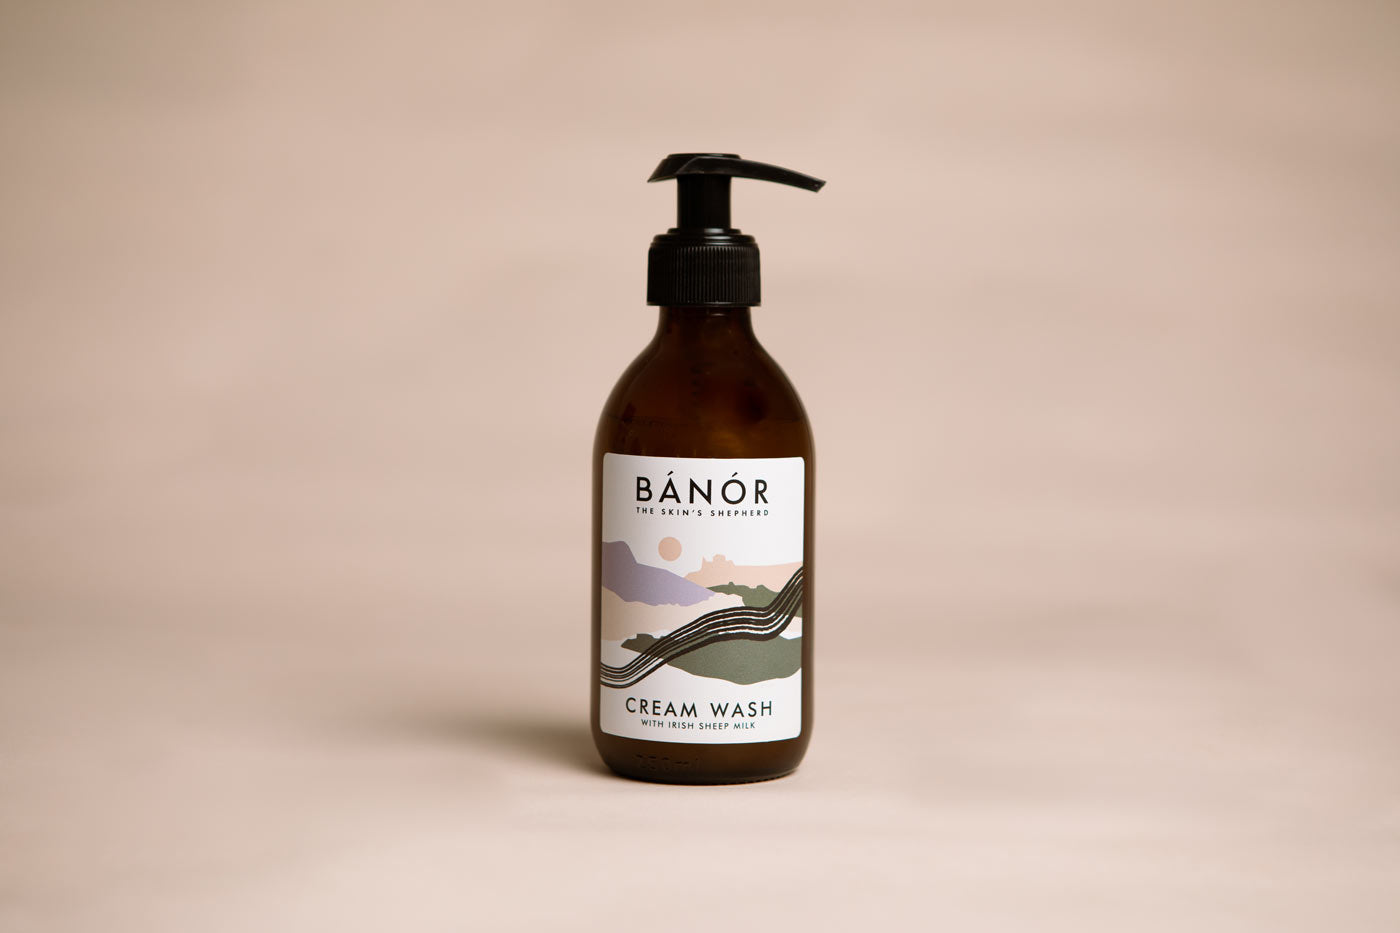 Bánór Natural Hand and Body Cream Wash made using Irish sheep milk